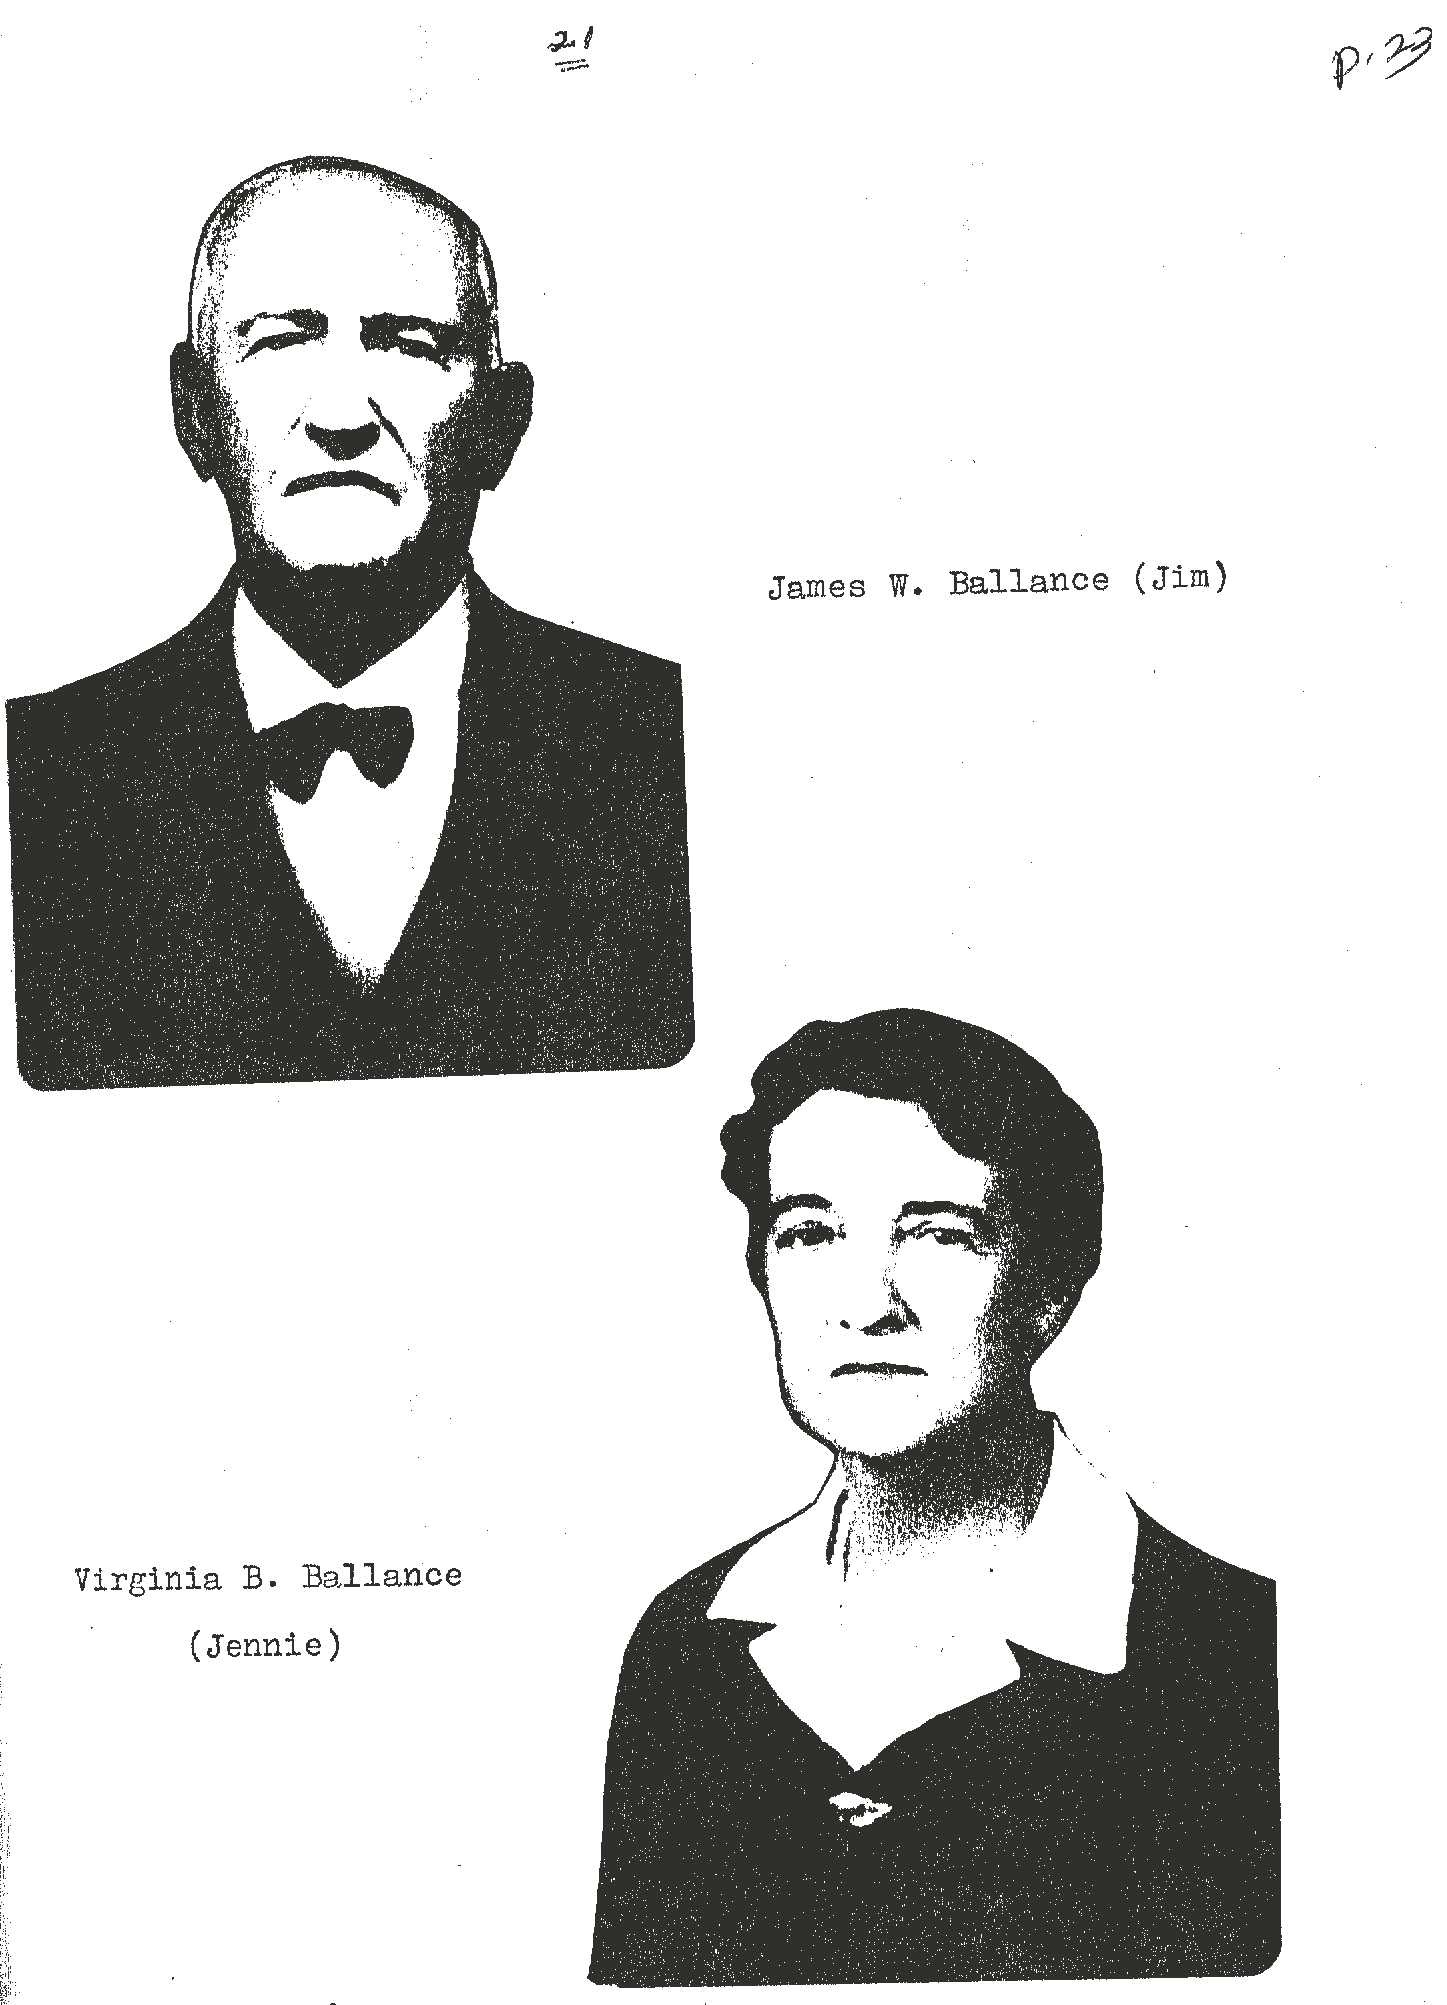 Ballance Family History pg 23